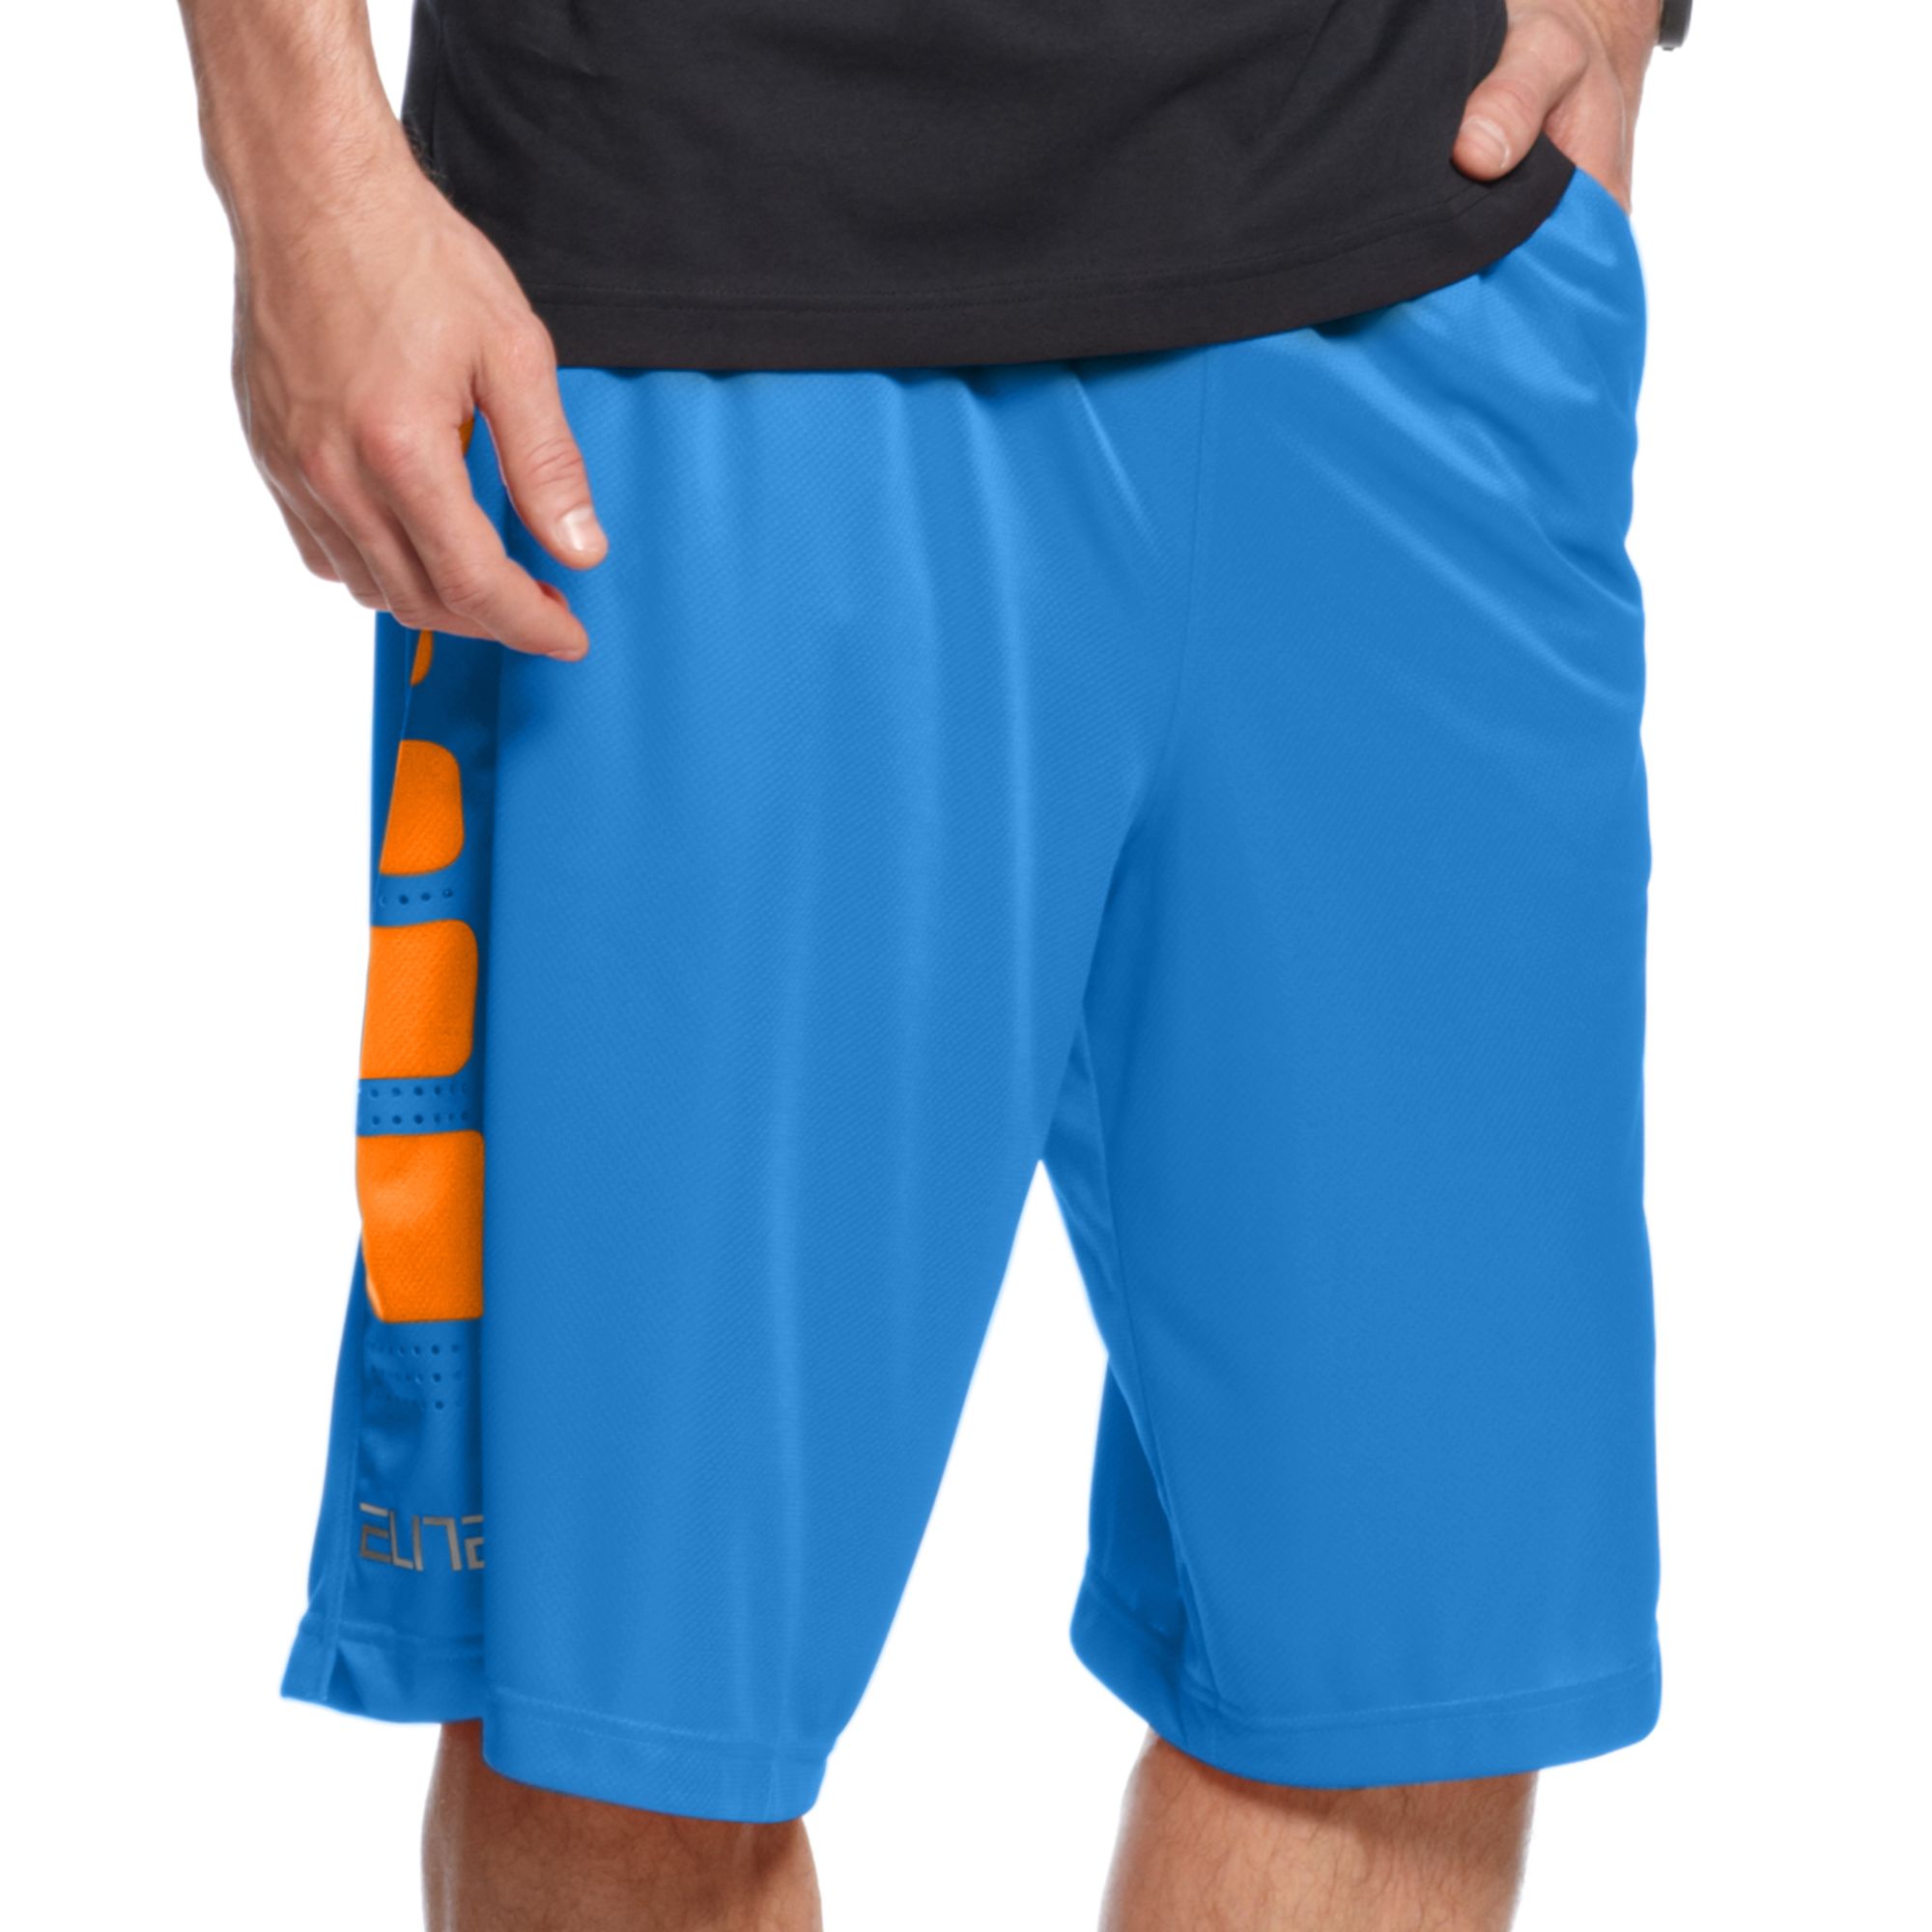 Lyst - Nike Basketball Shorts in Blue for Men